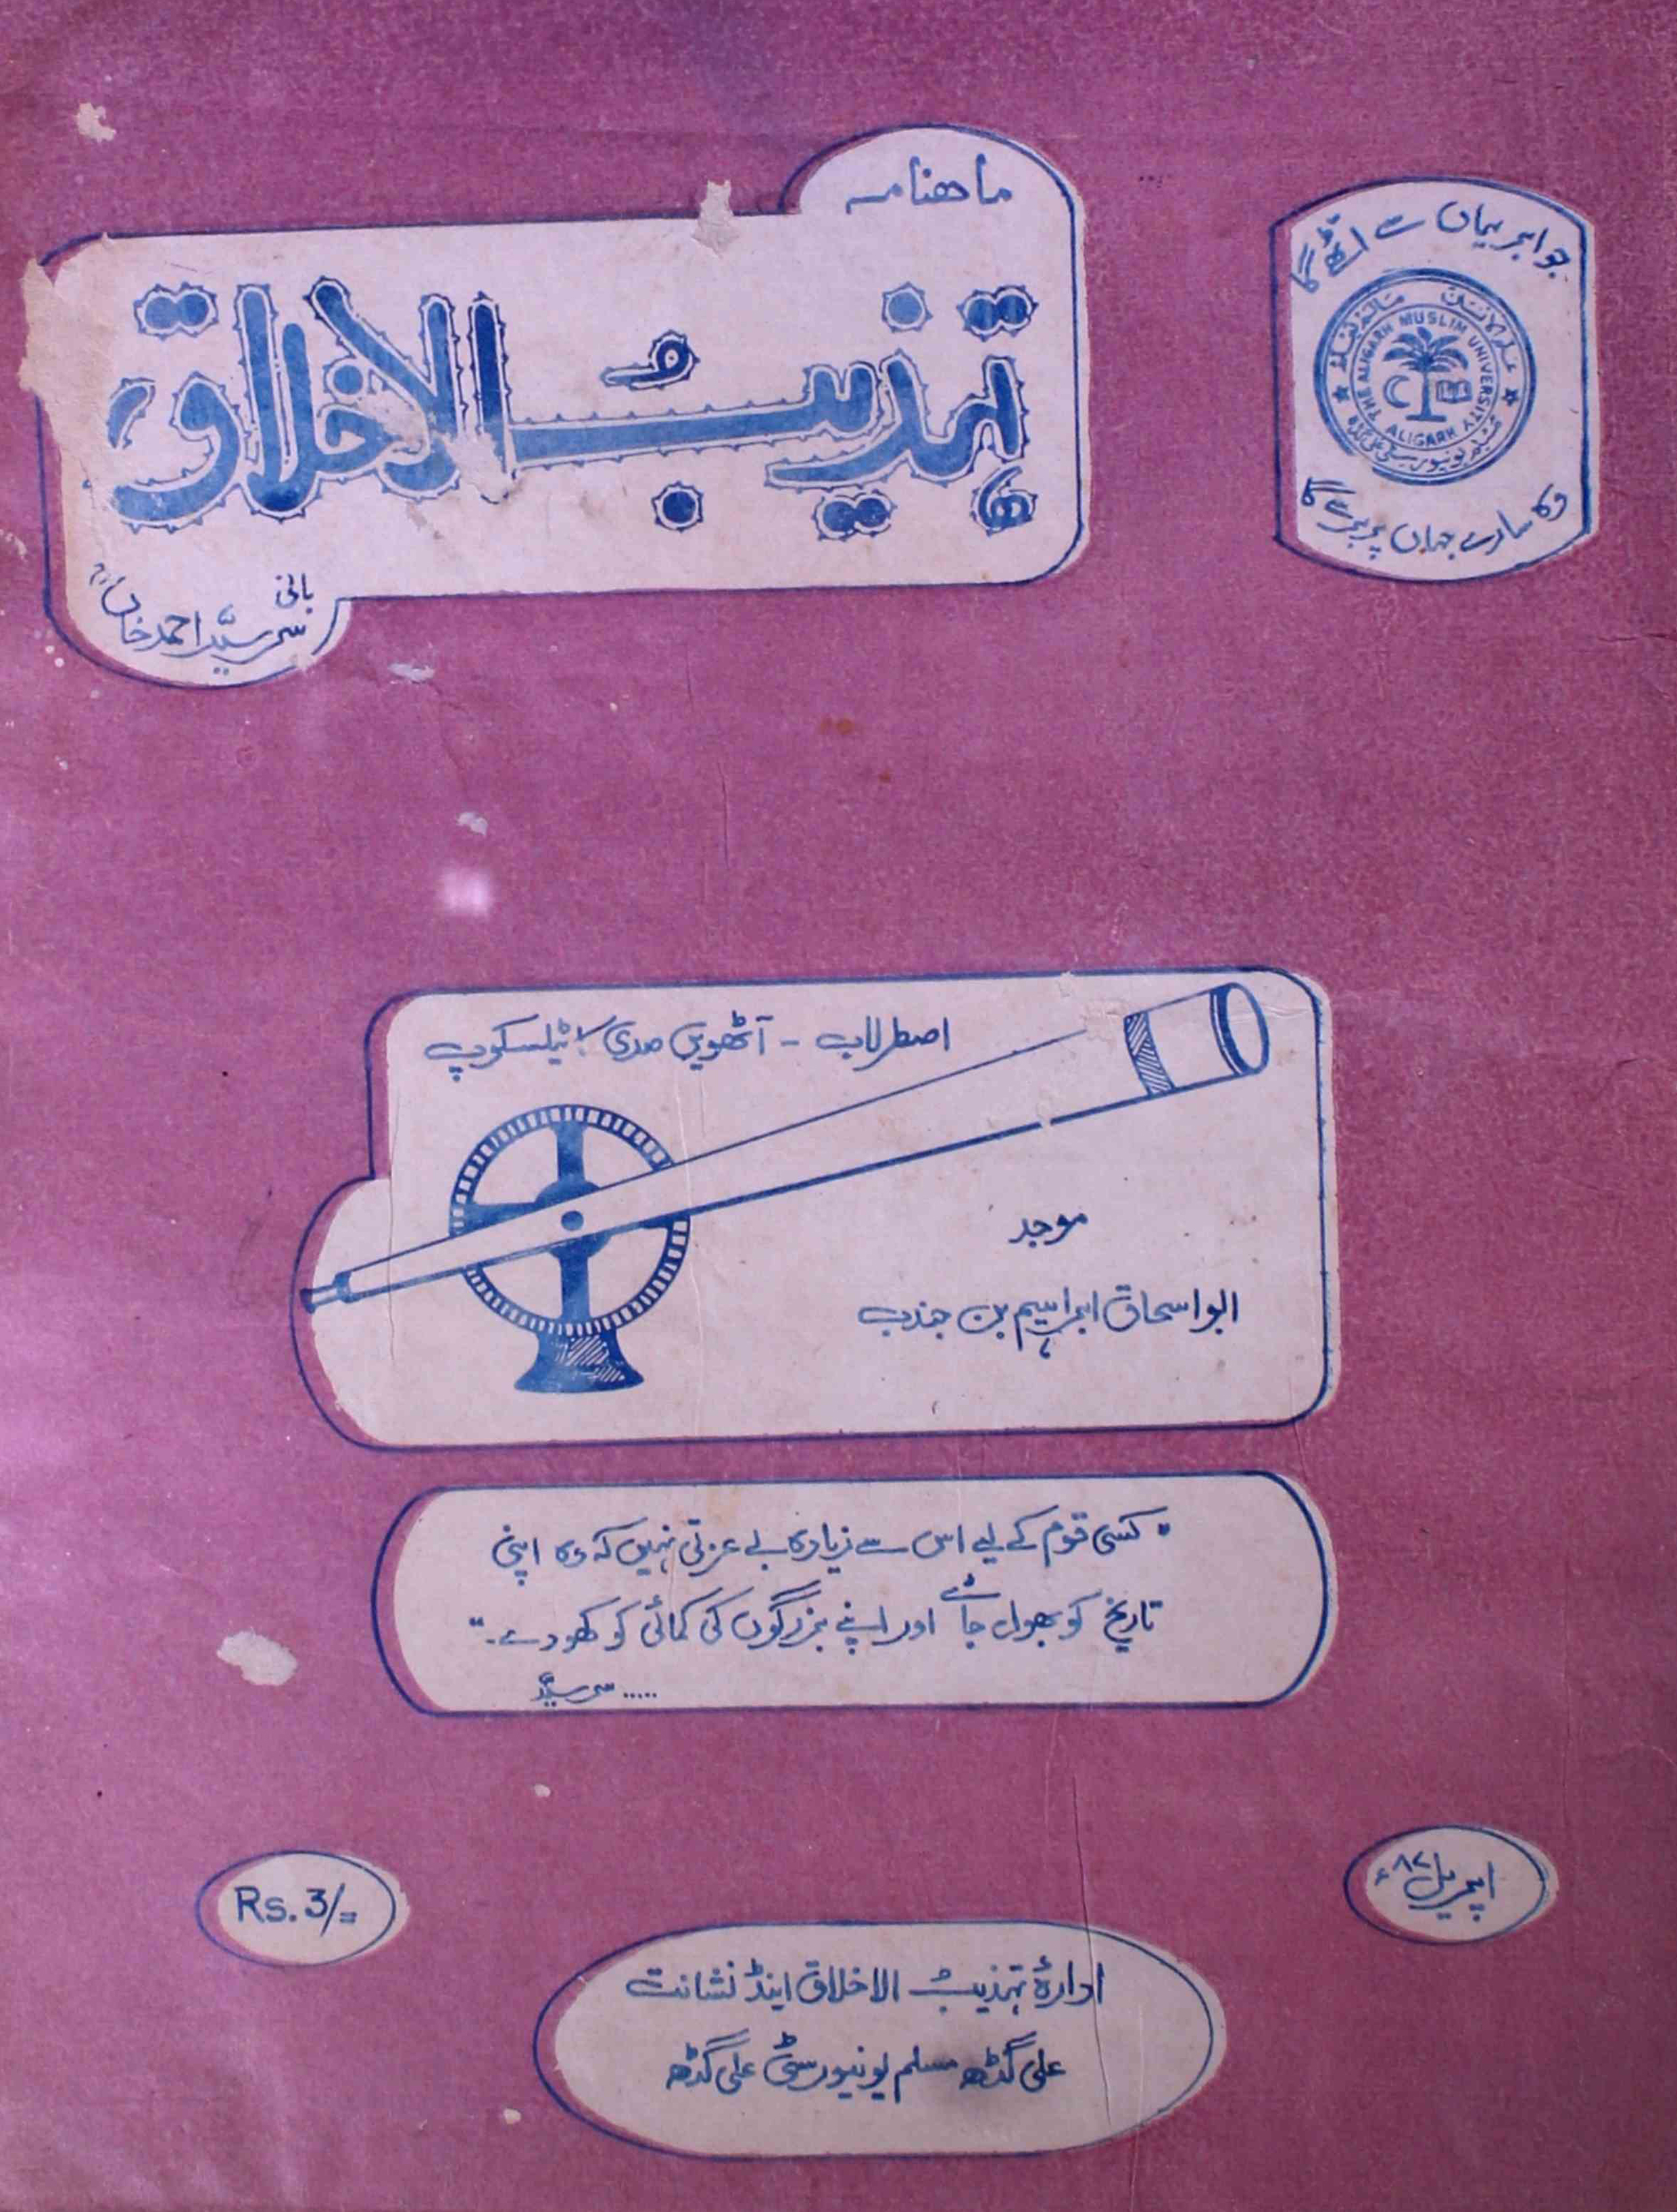 tahzibul-akhlaq-aligarh-shumara-number-004-asrar-ahmad-magazines